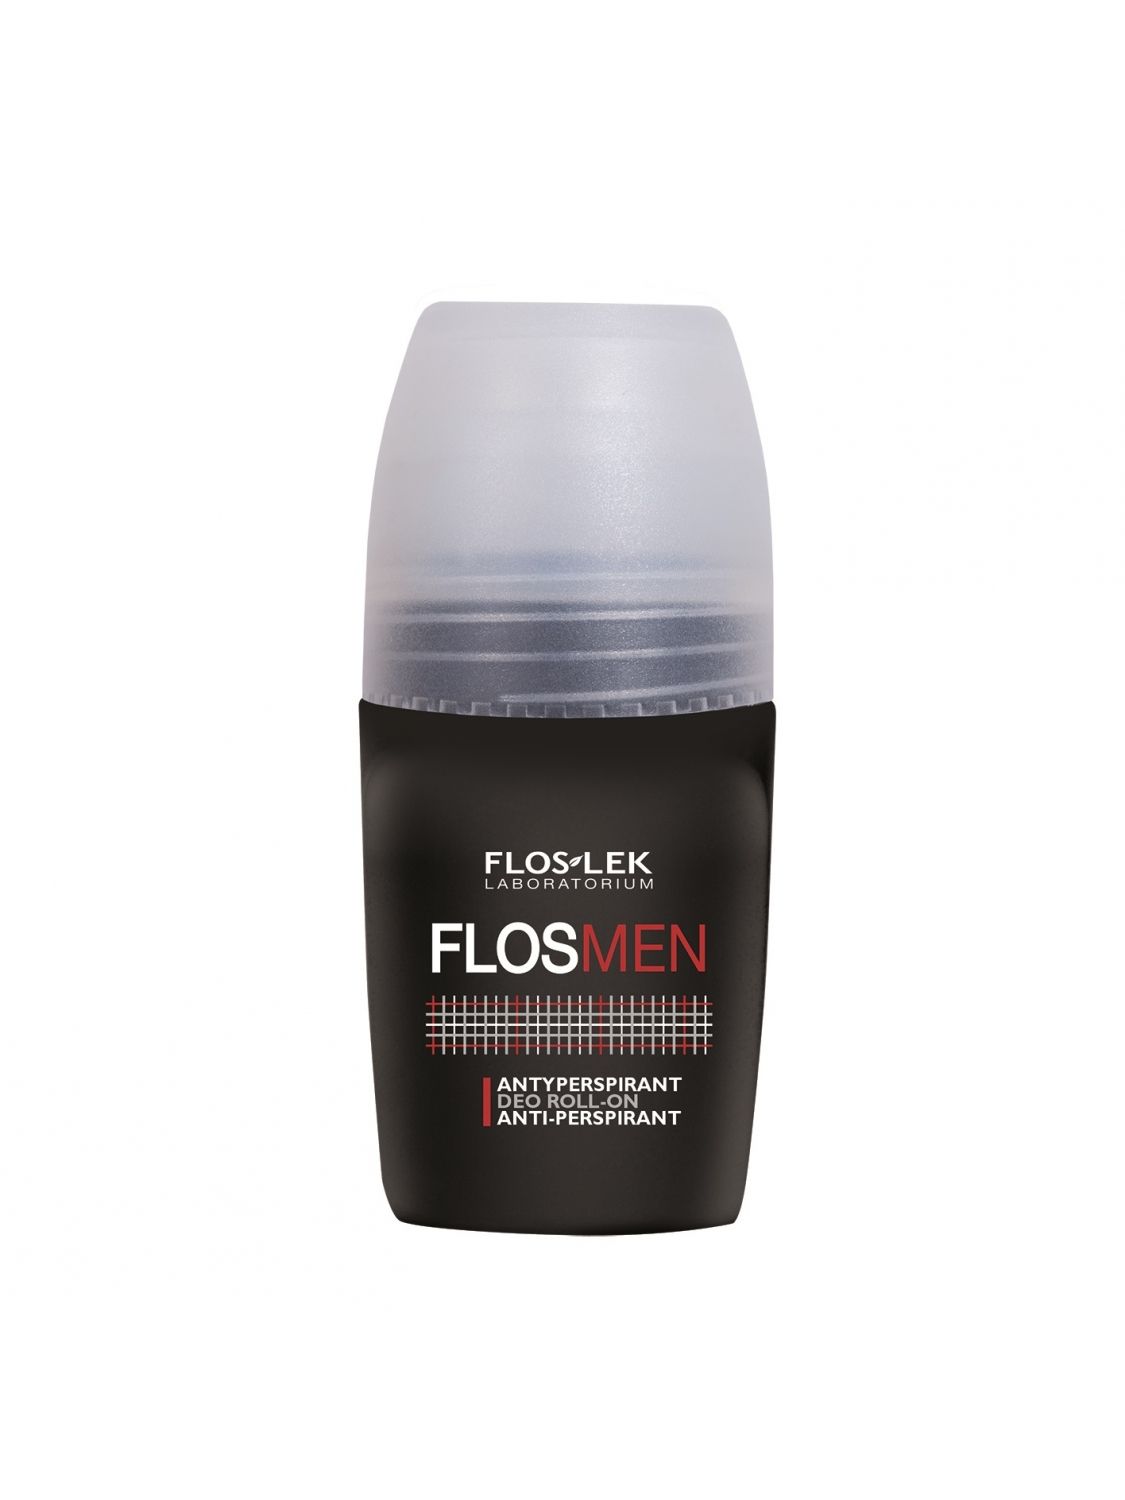 FLOSMEN® Anti-Transpirant Deo Roll-On 50 ml - Floslek